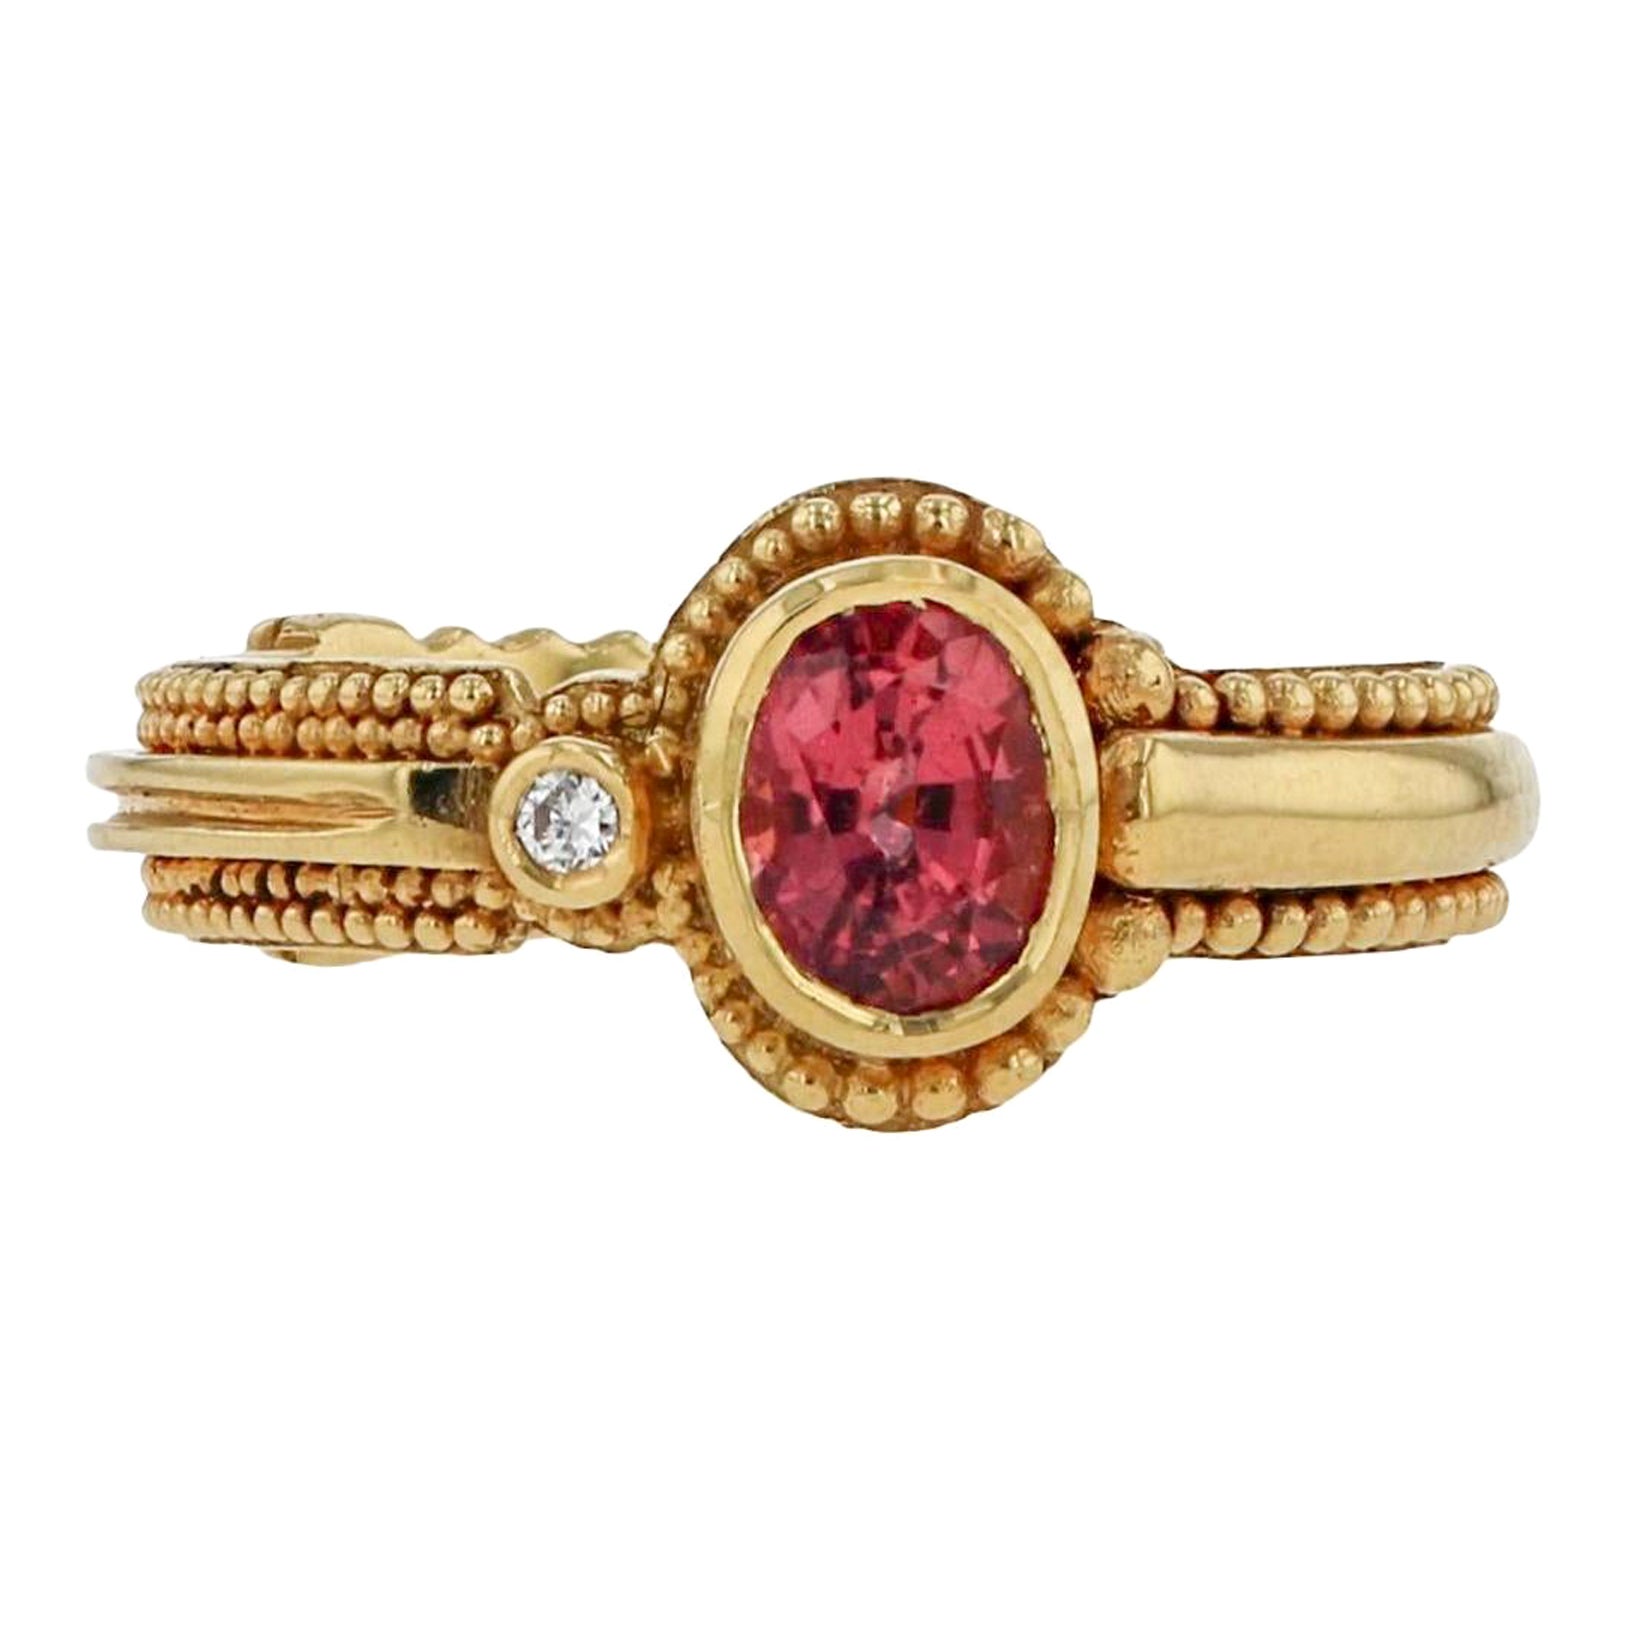 Kent Raible 18k Gold, Pink Tourmaline and Diamond Ring with Gold Granulation